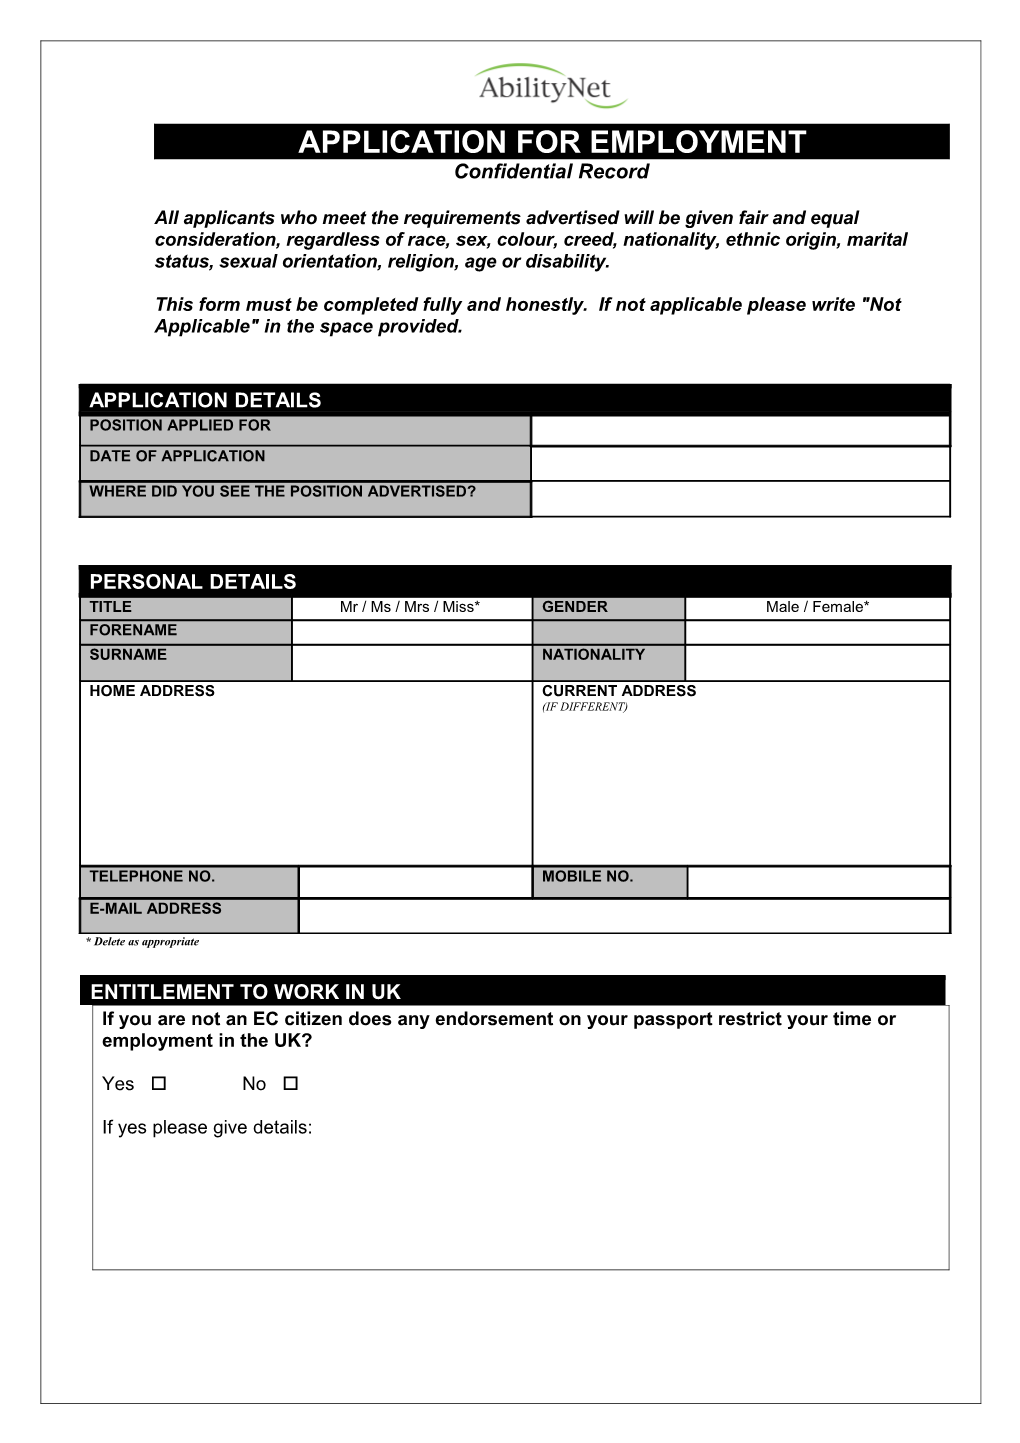 Abilitynet Application Form